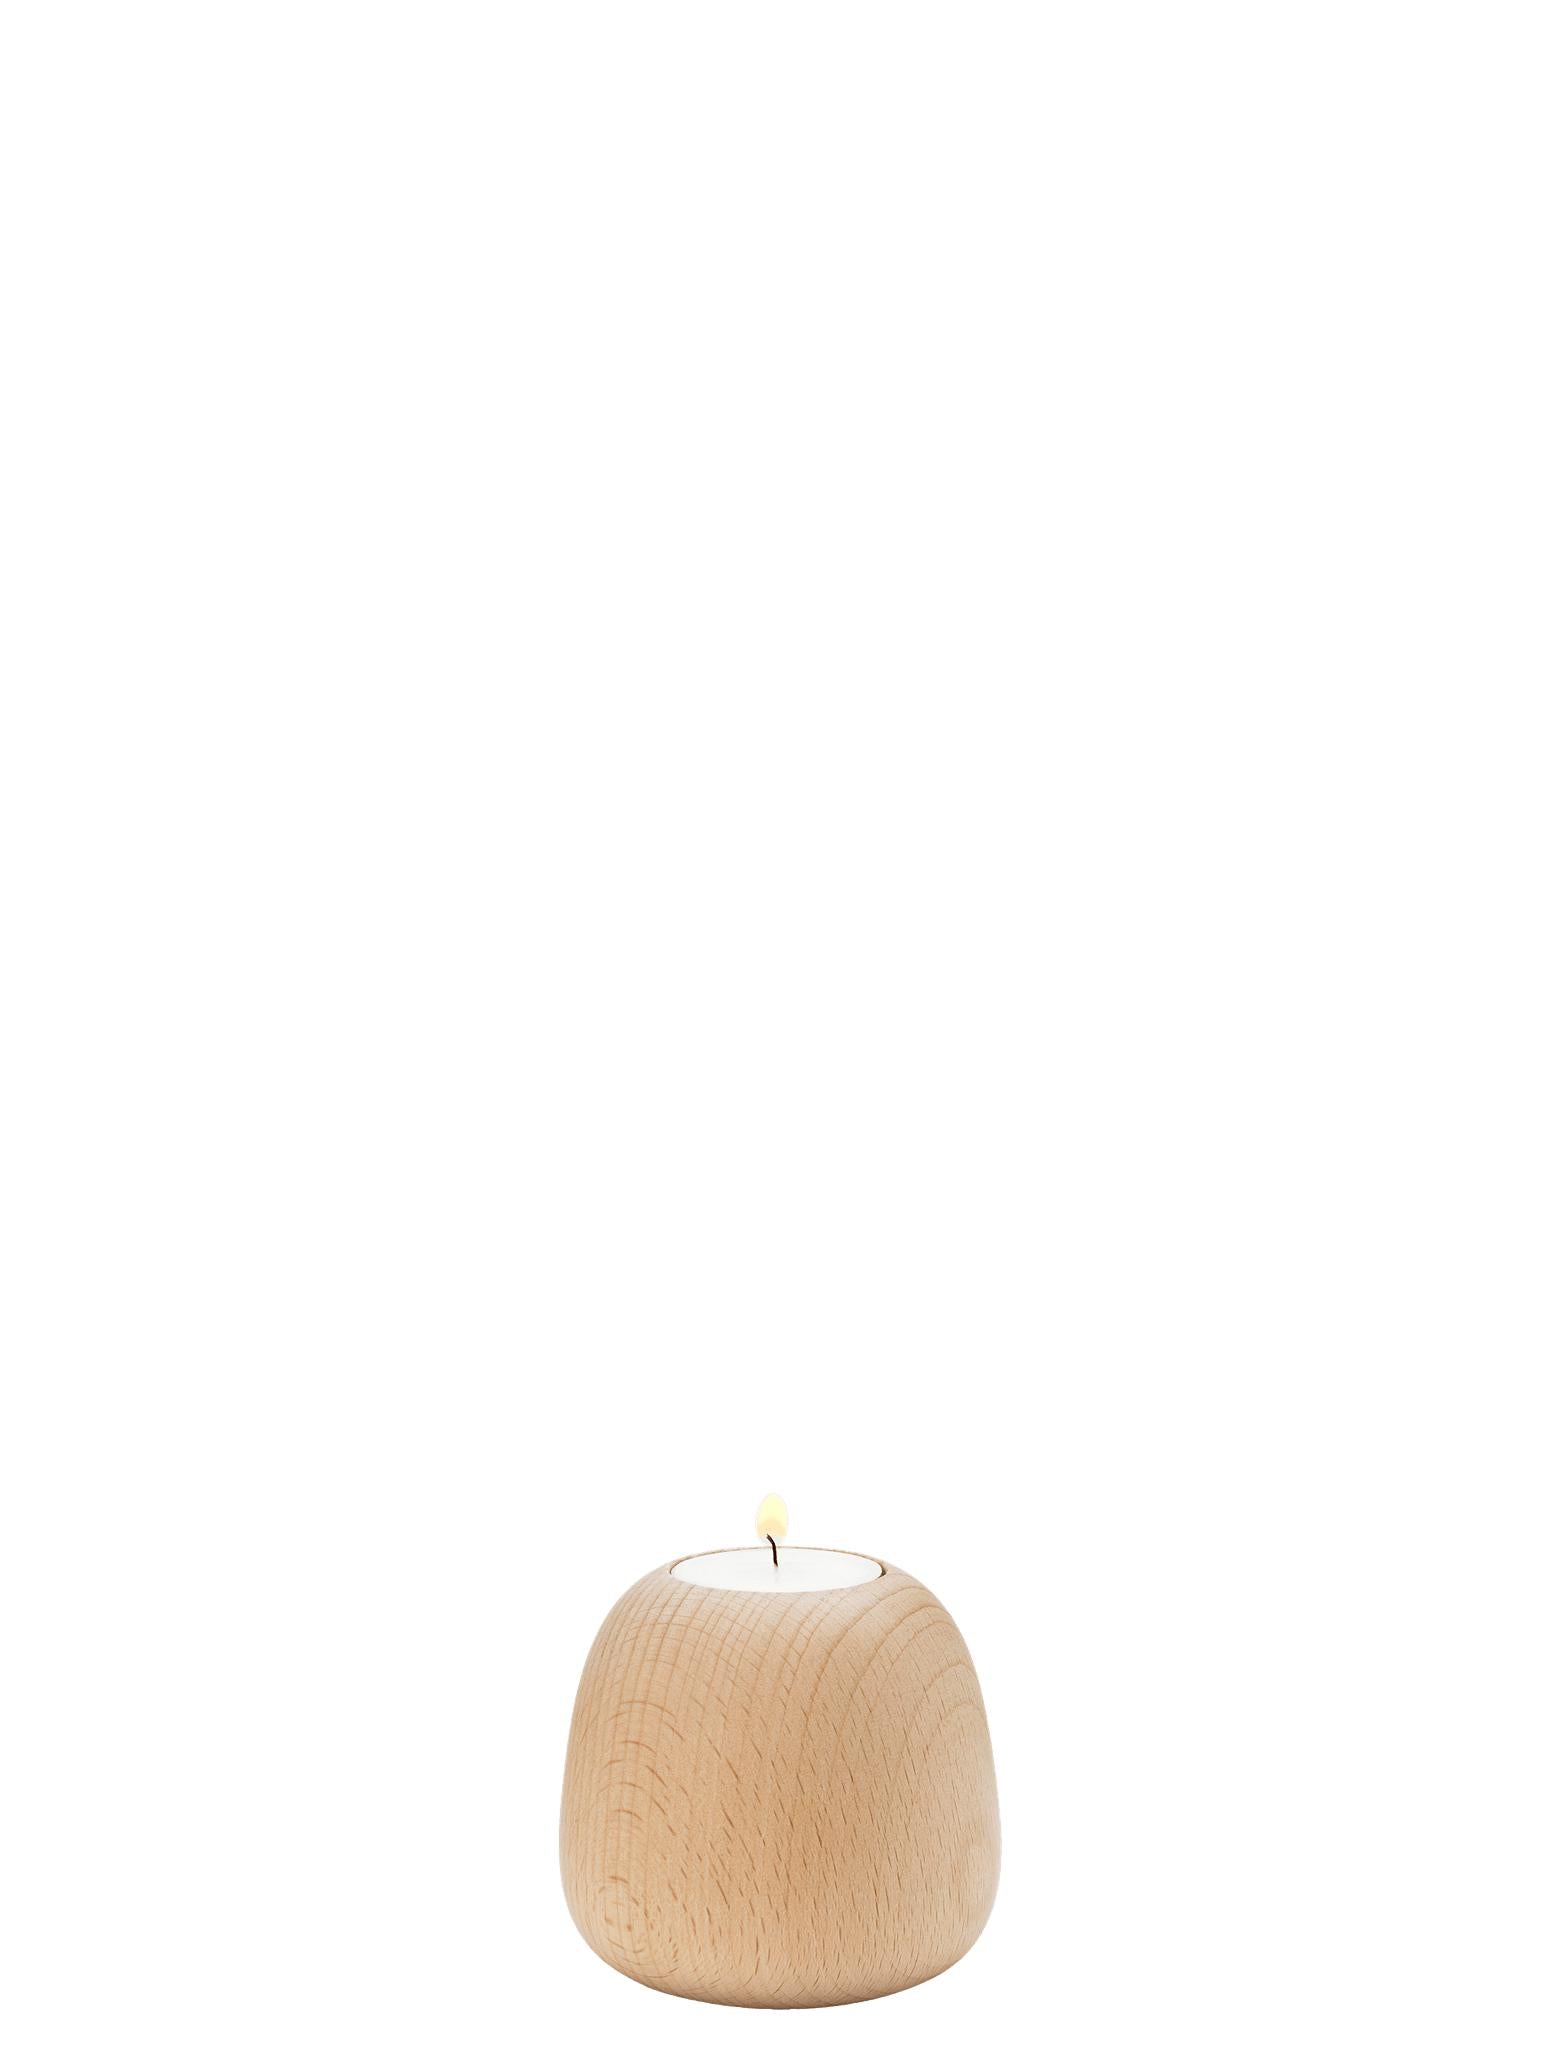 Stelton Ora Candlestick 8 cm, madera de haya